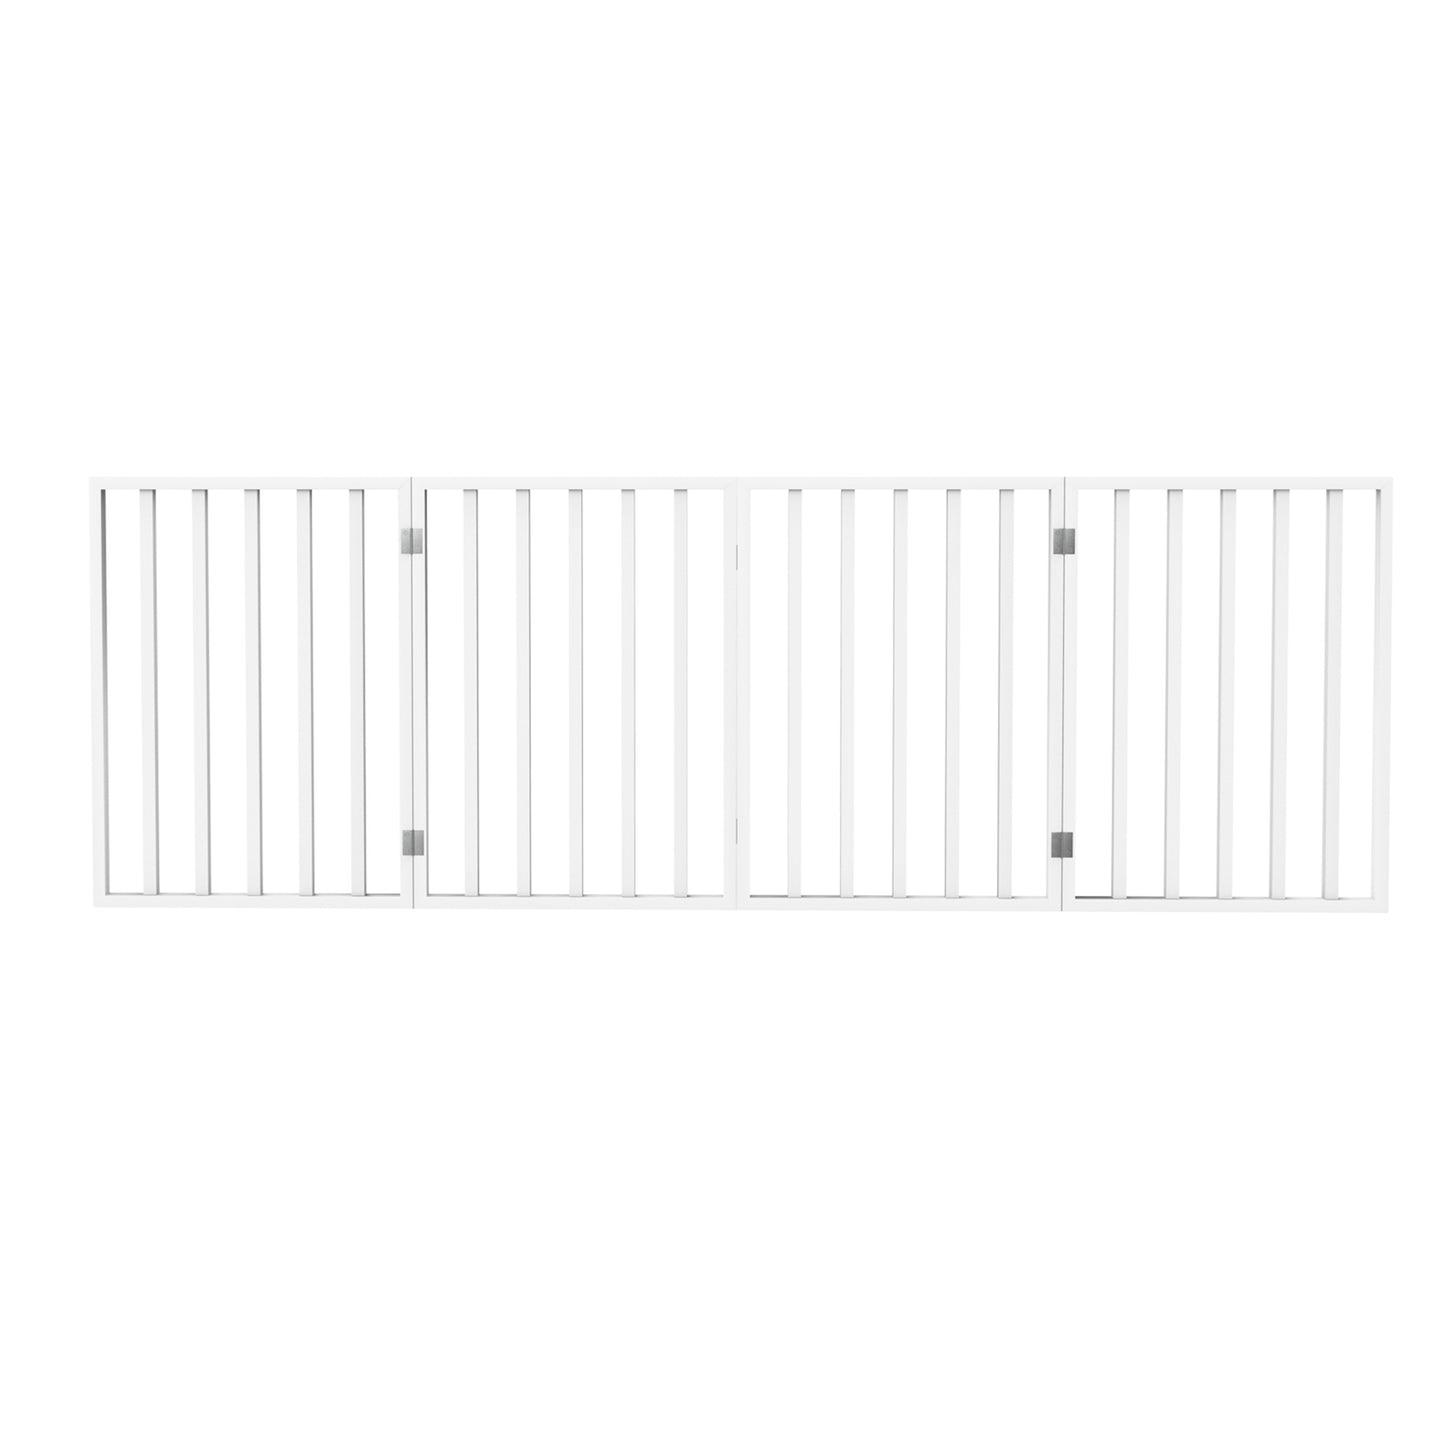 PETMAKER 4-Panel Indoor Foldable Pet Gate, White